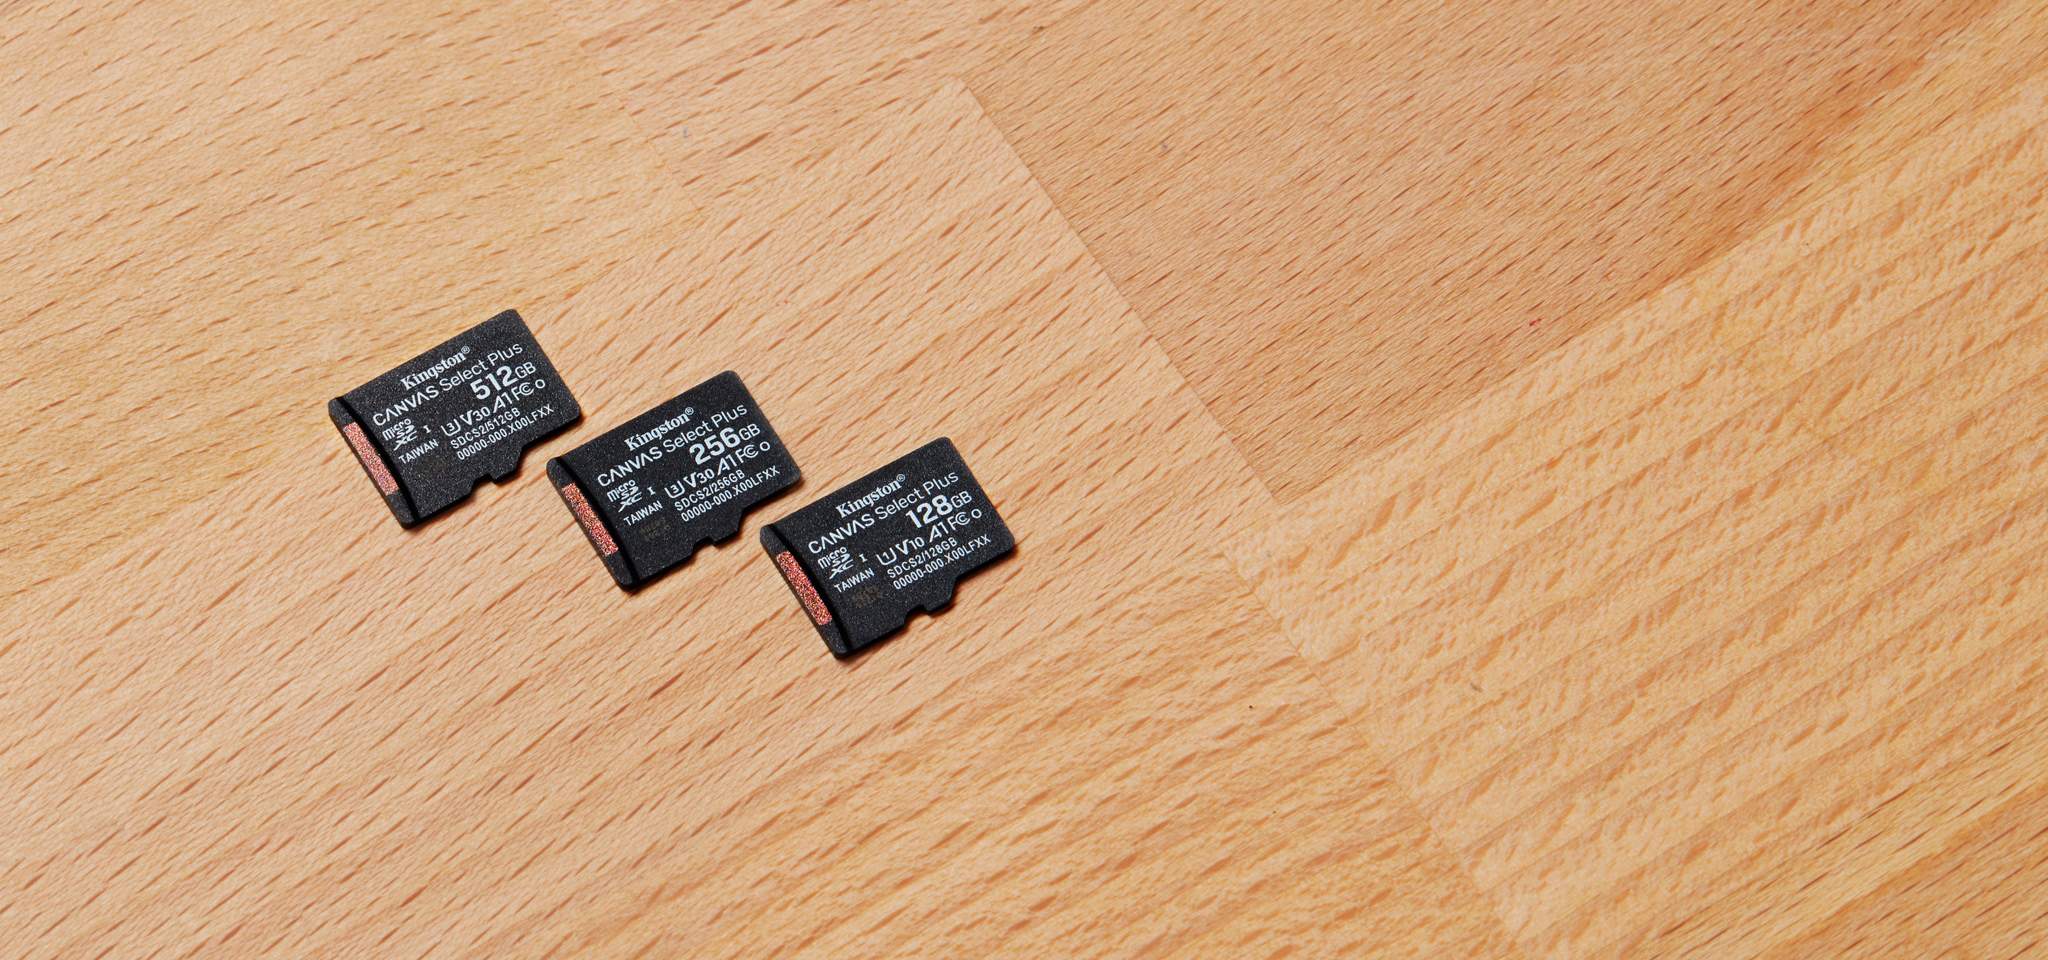 Kingston SDC10G2/32GB - Tarjeta microSD de 32 GB